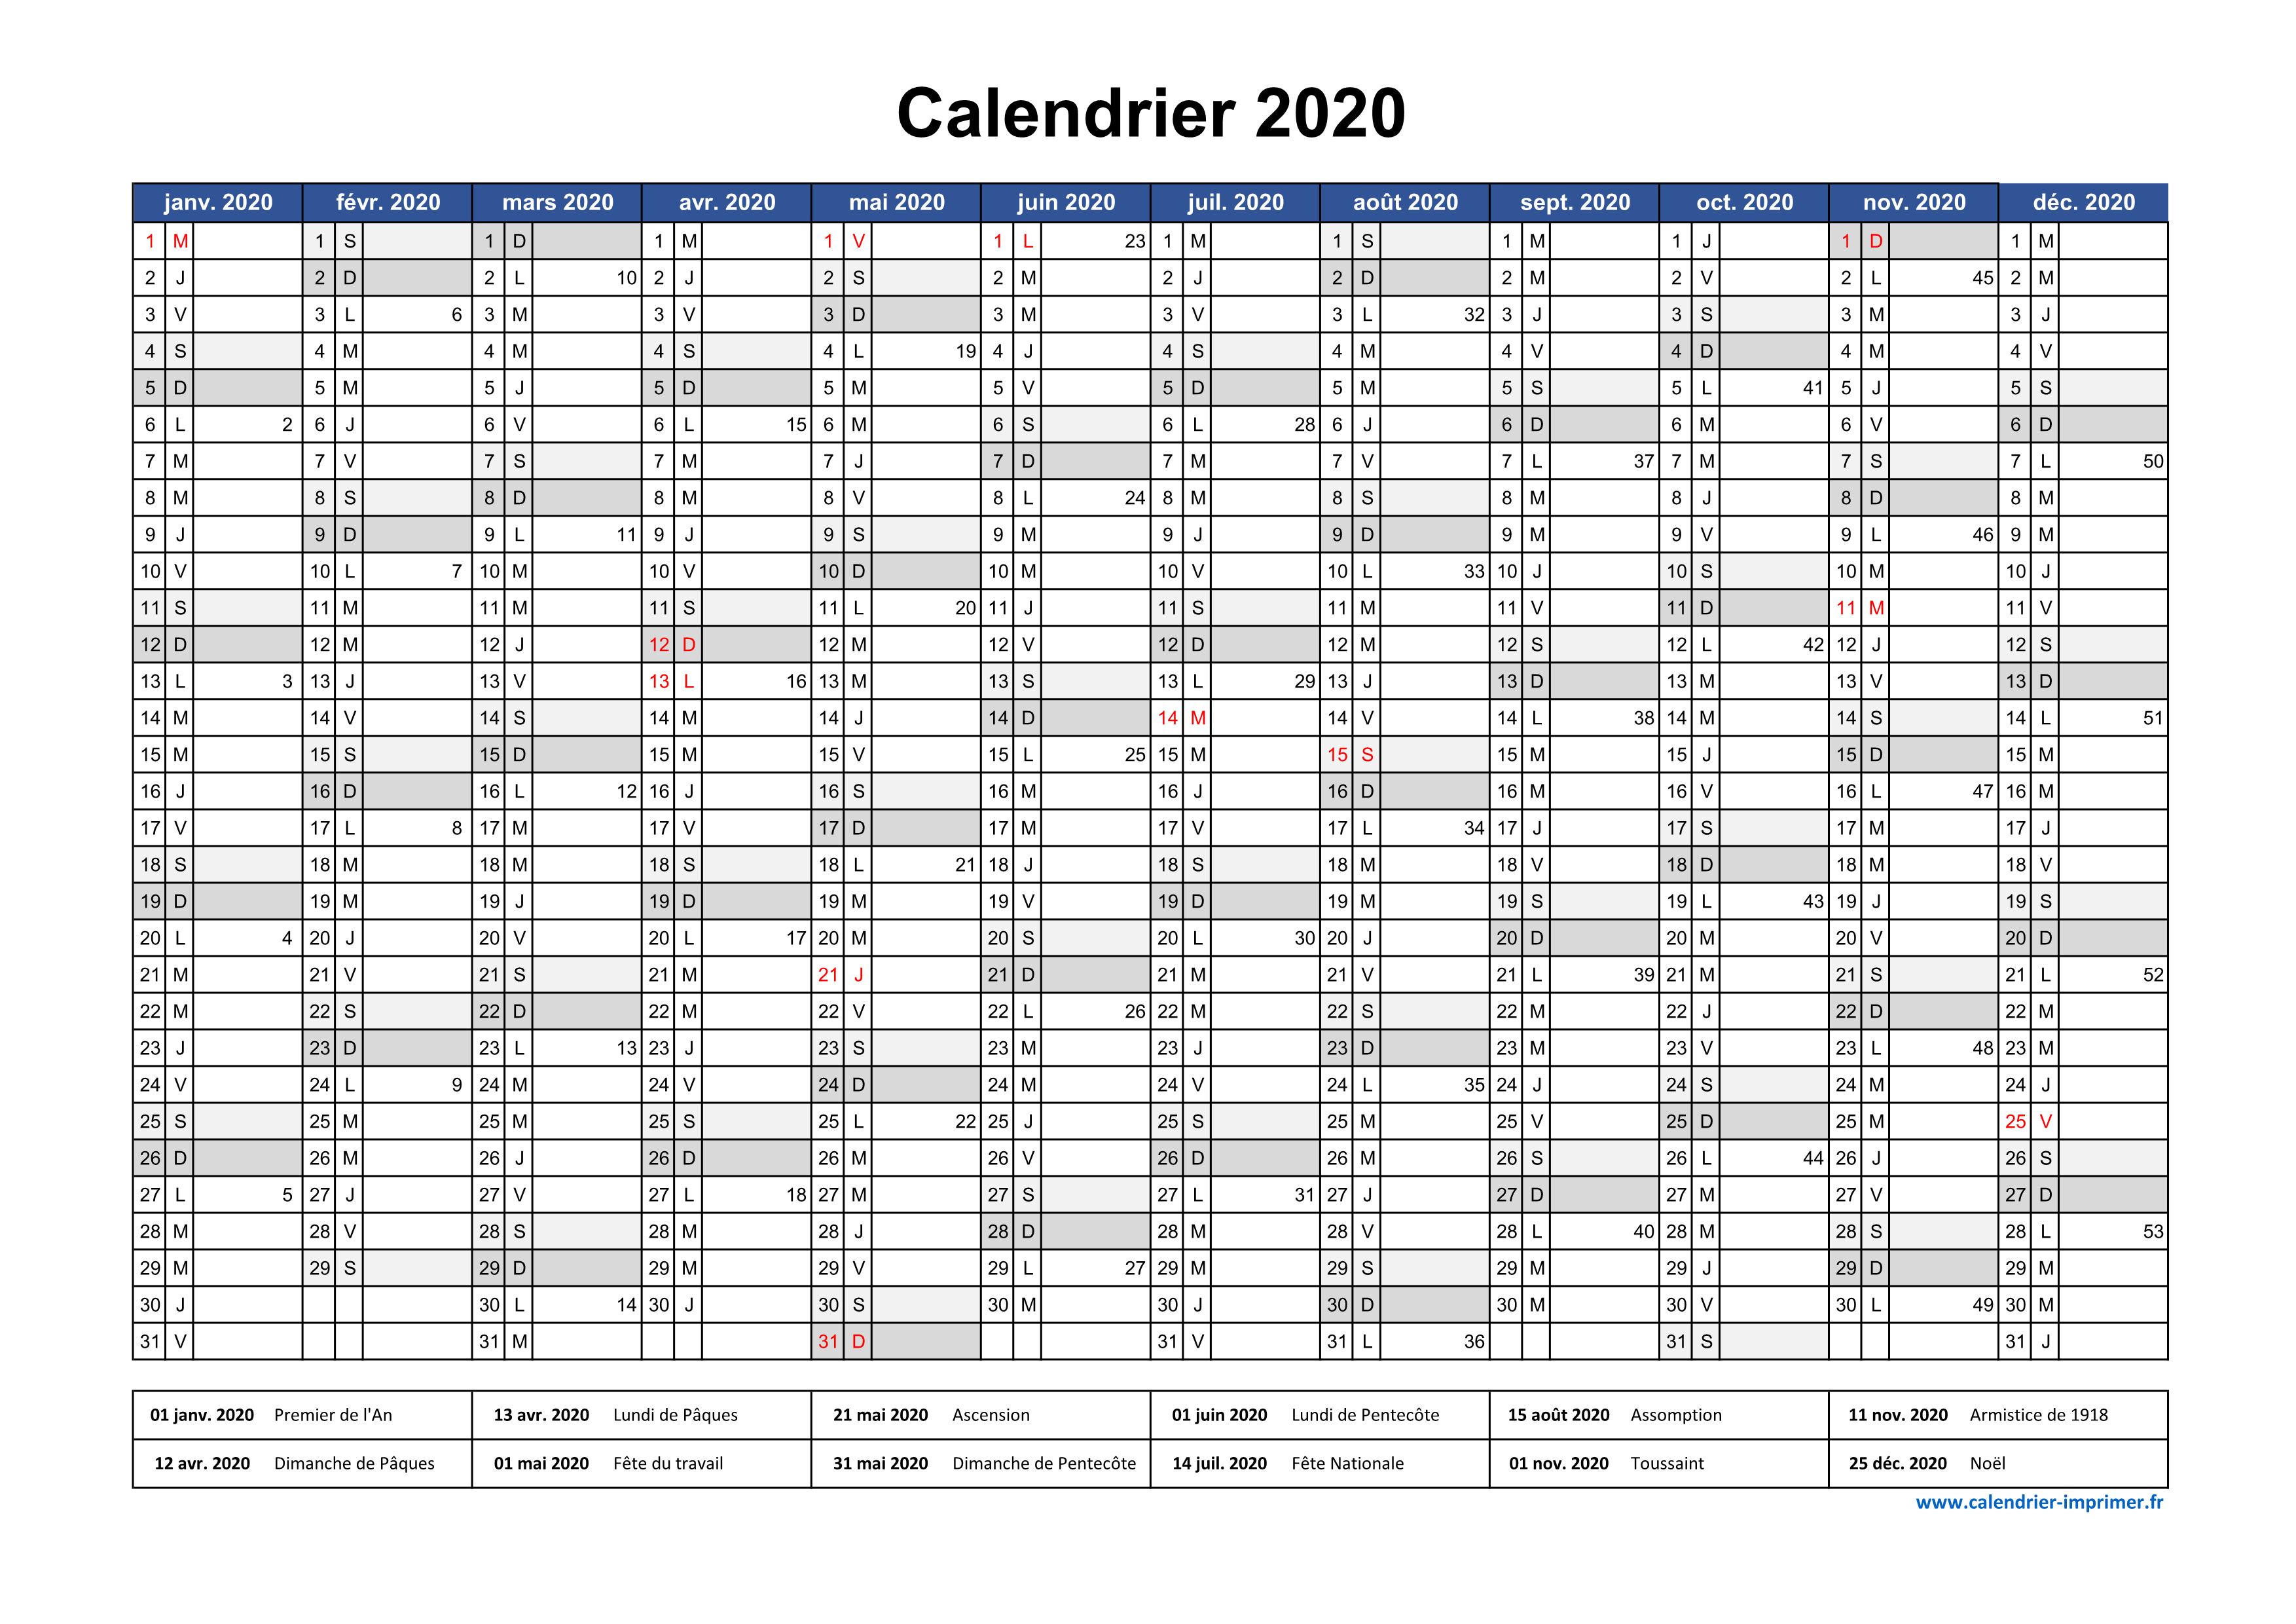 Calendrier agenda gratuit. Calendrier planning mensuel 2020 vierge